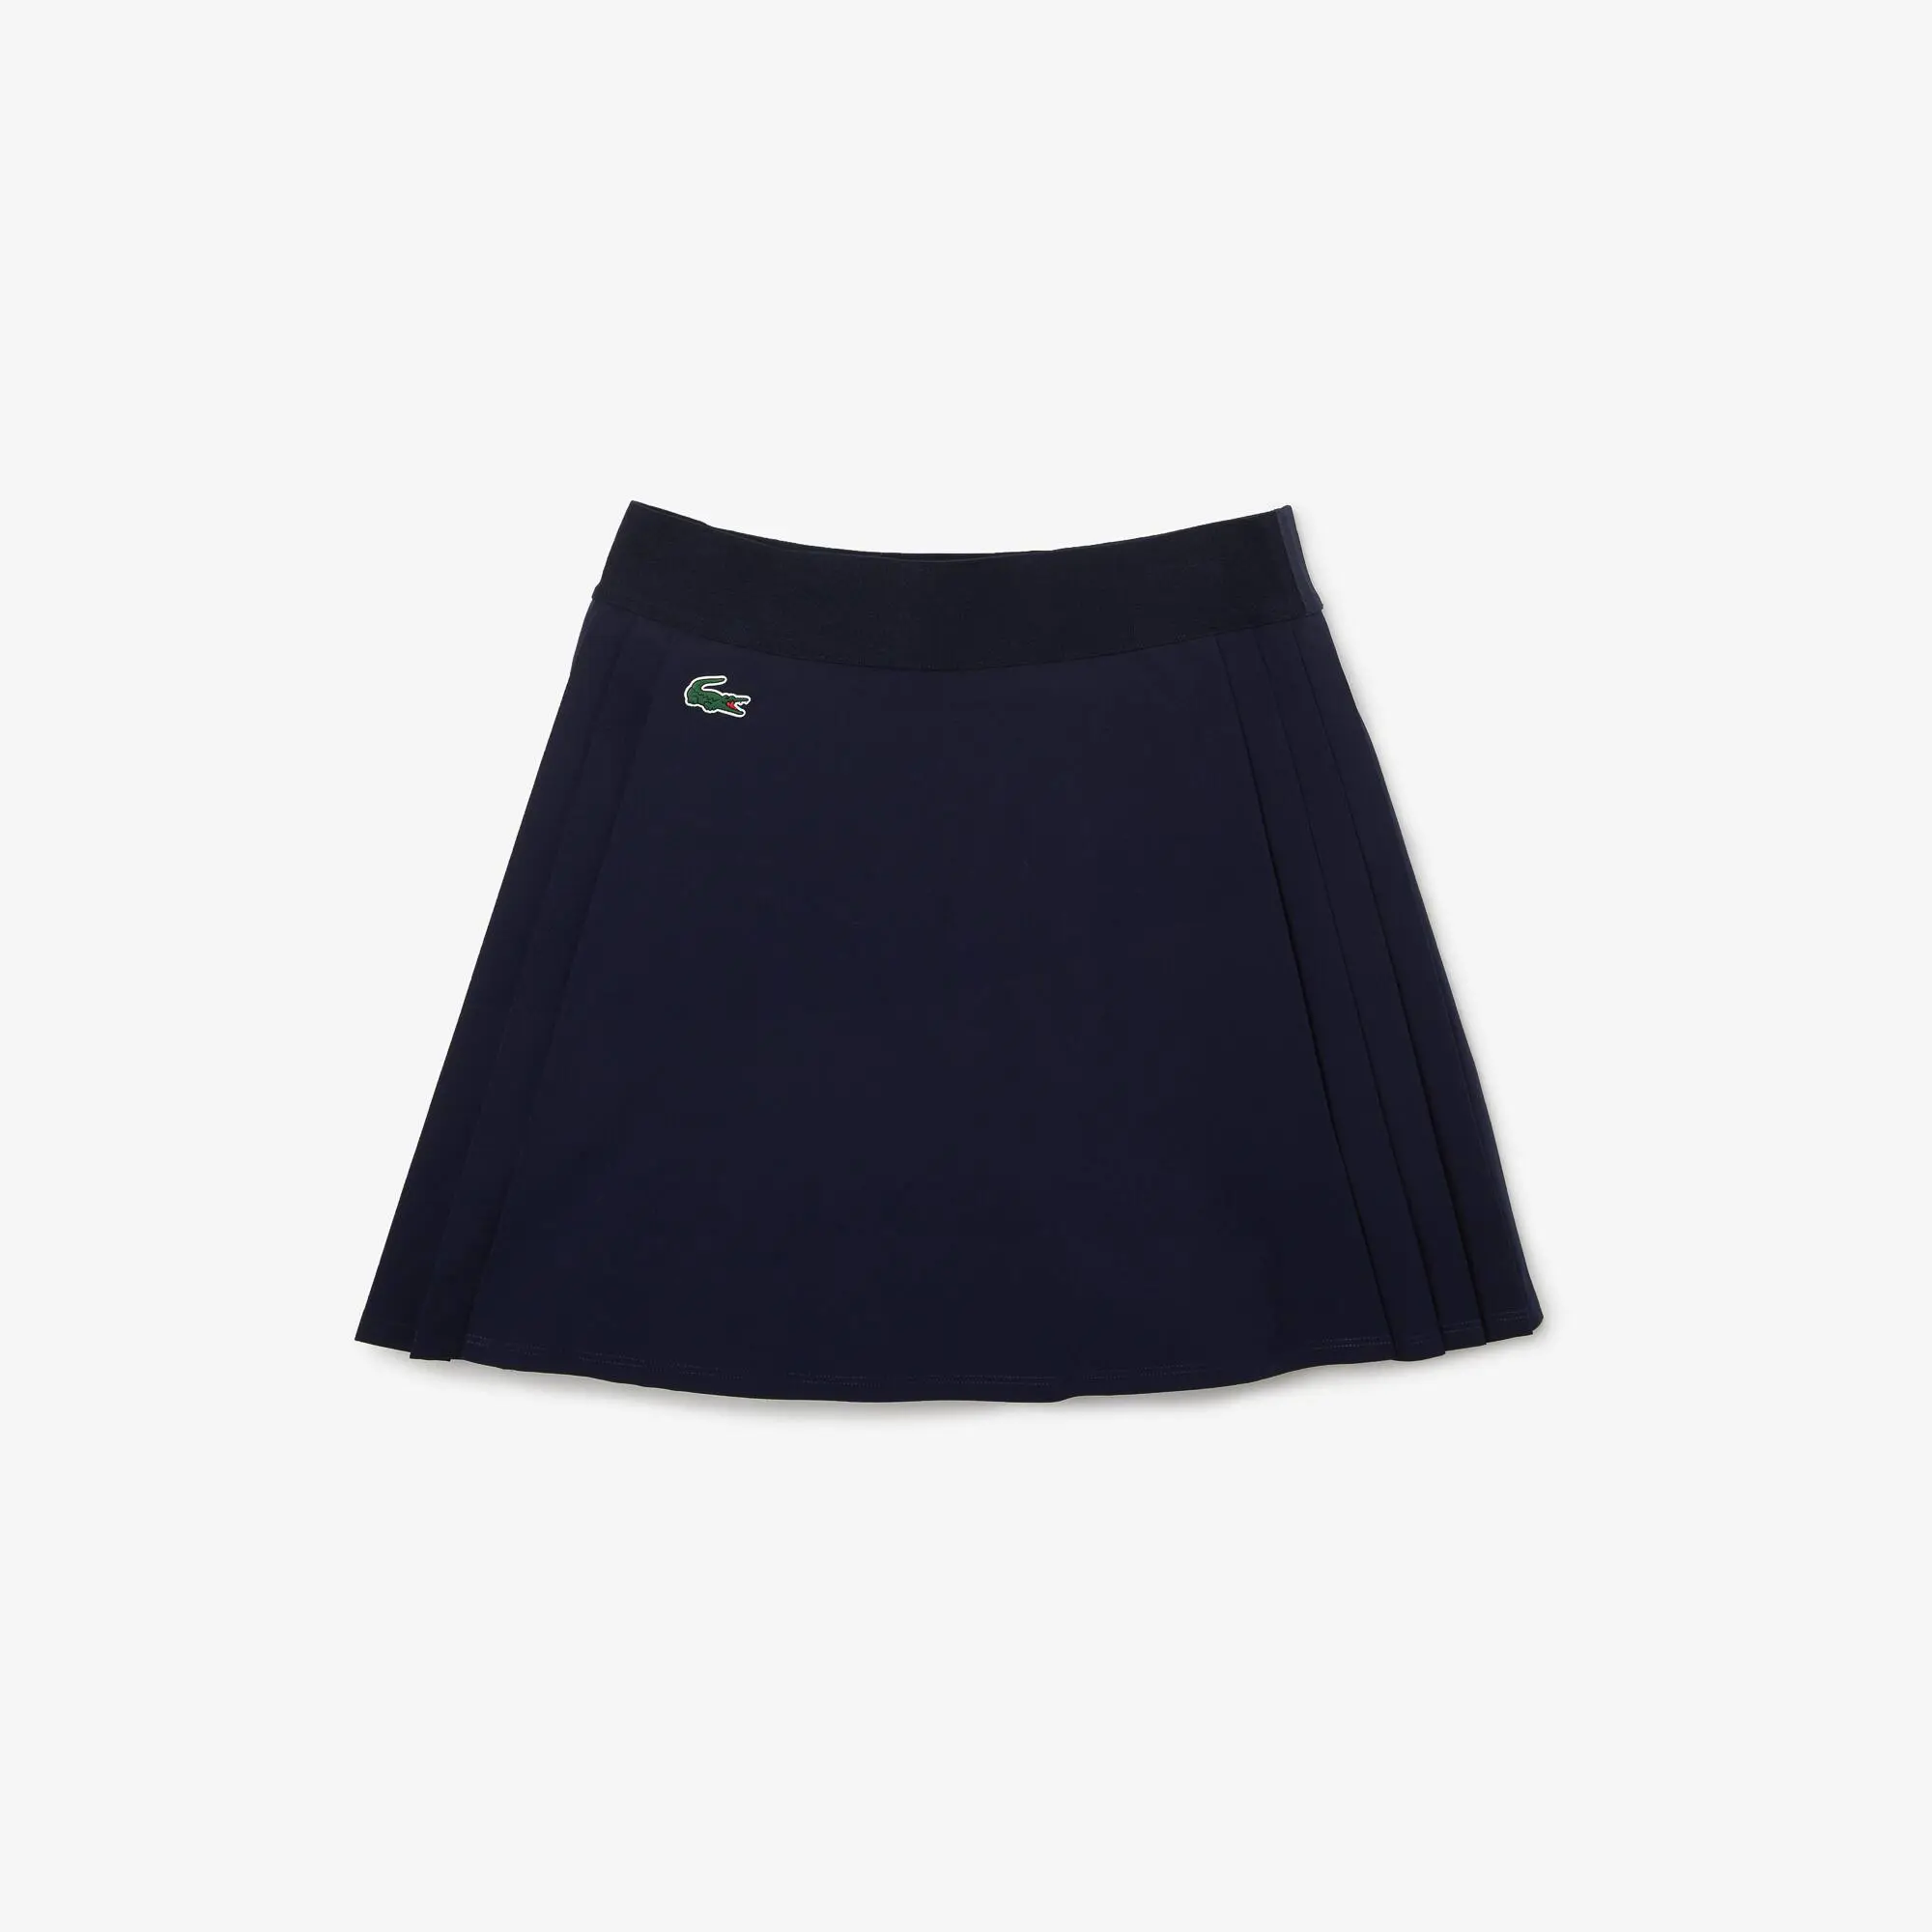 Lacoste Women's Lacoste SPORT Built-In Short Golf Skirt. 2